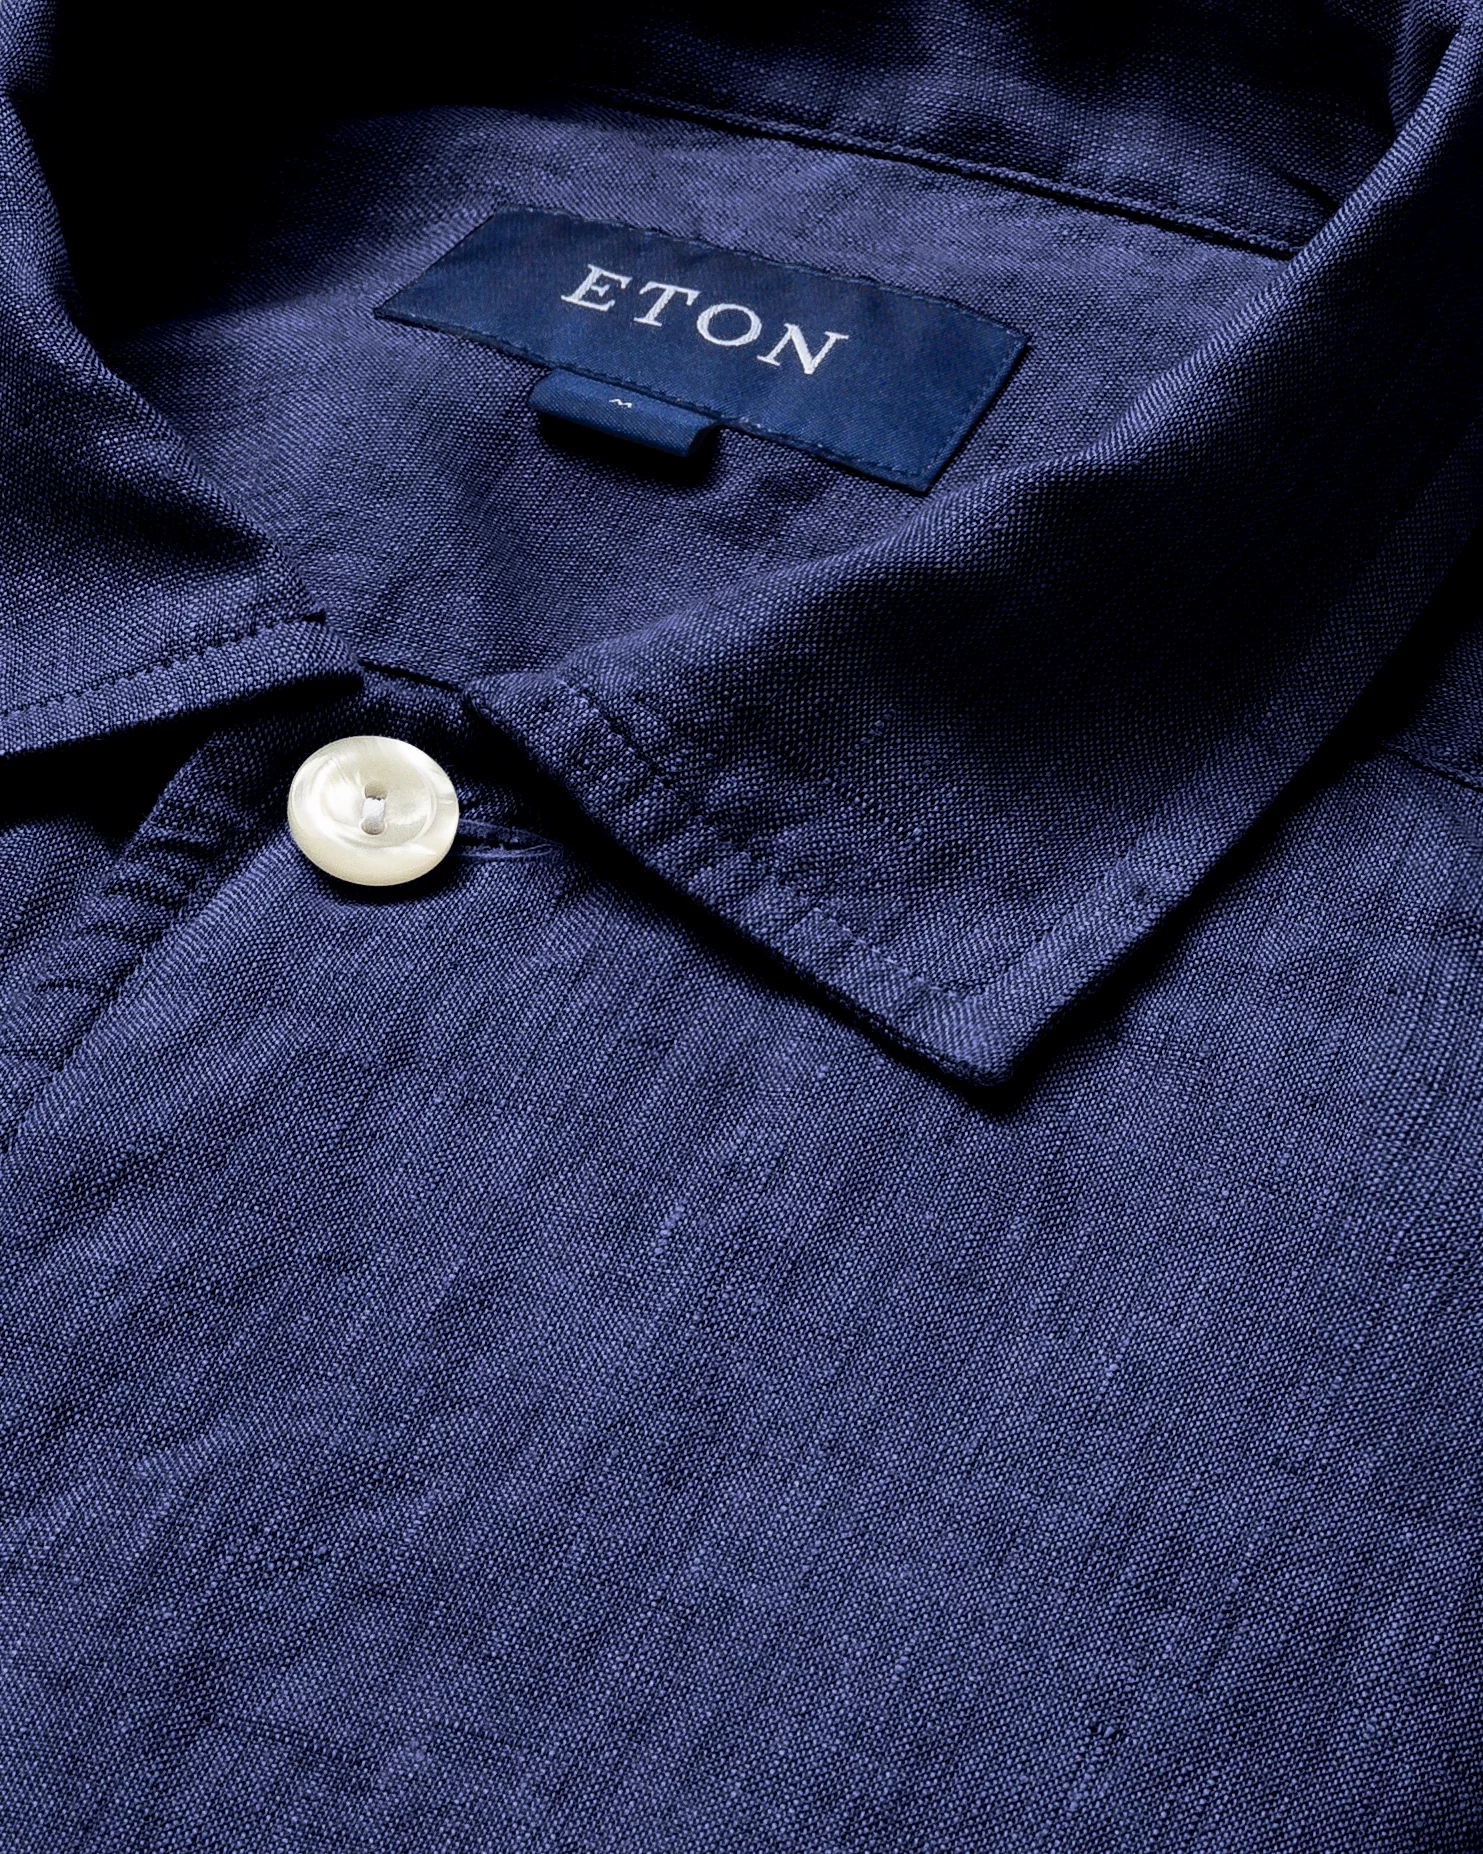 Eton - blue linen shirt resort short sleeve boxfit